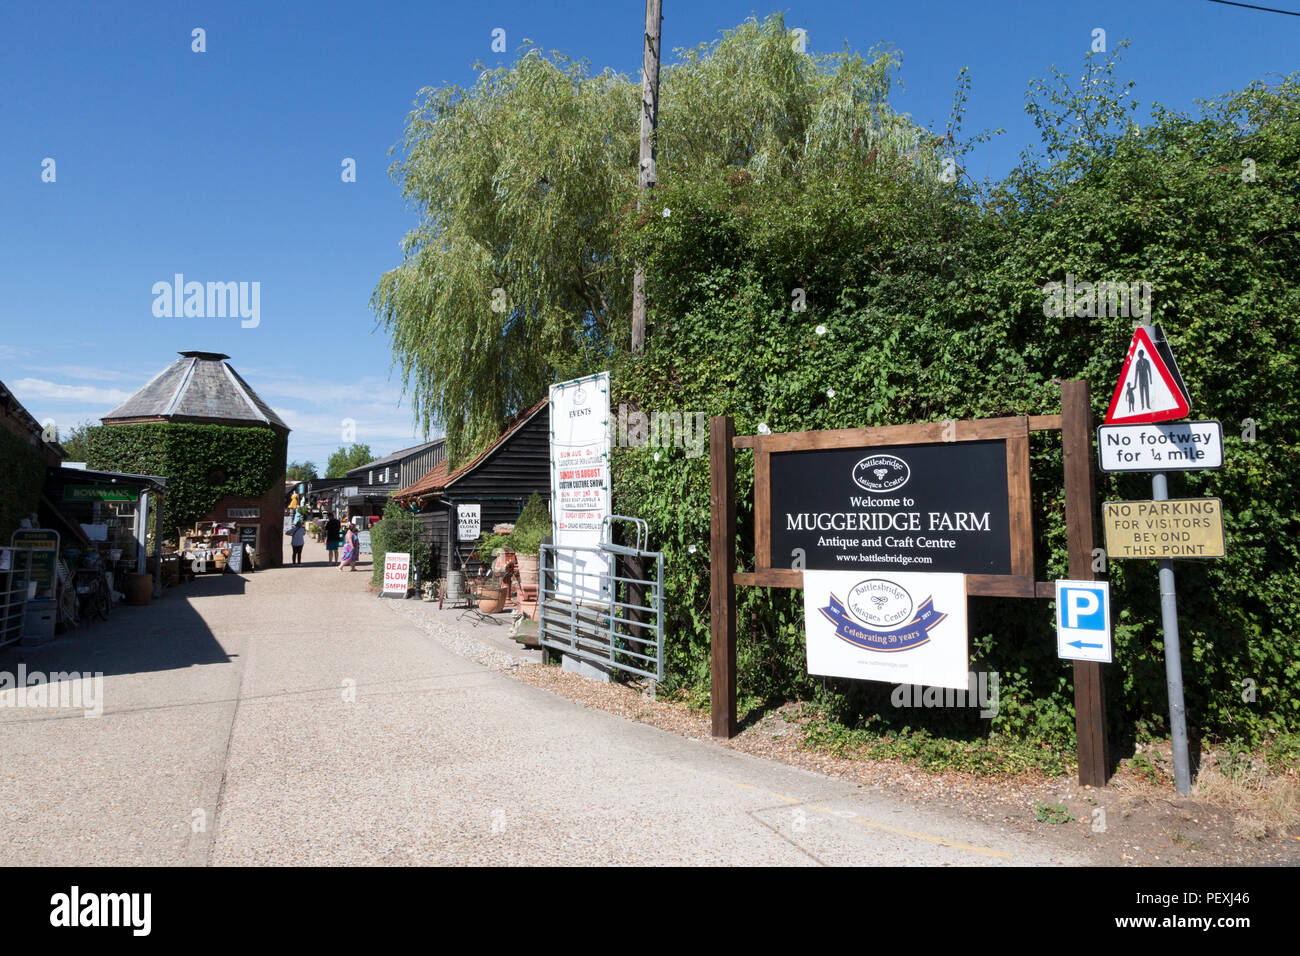 Entrance to Muggeridge Farm antiques centre at Battlesbridge, village in Essex, UK. Stock Photo